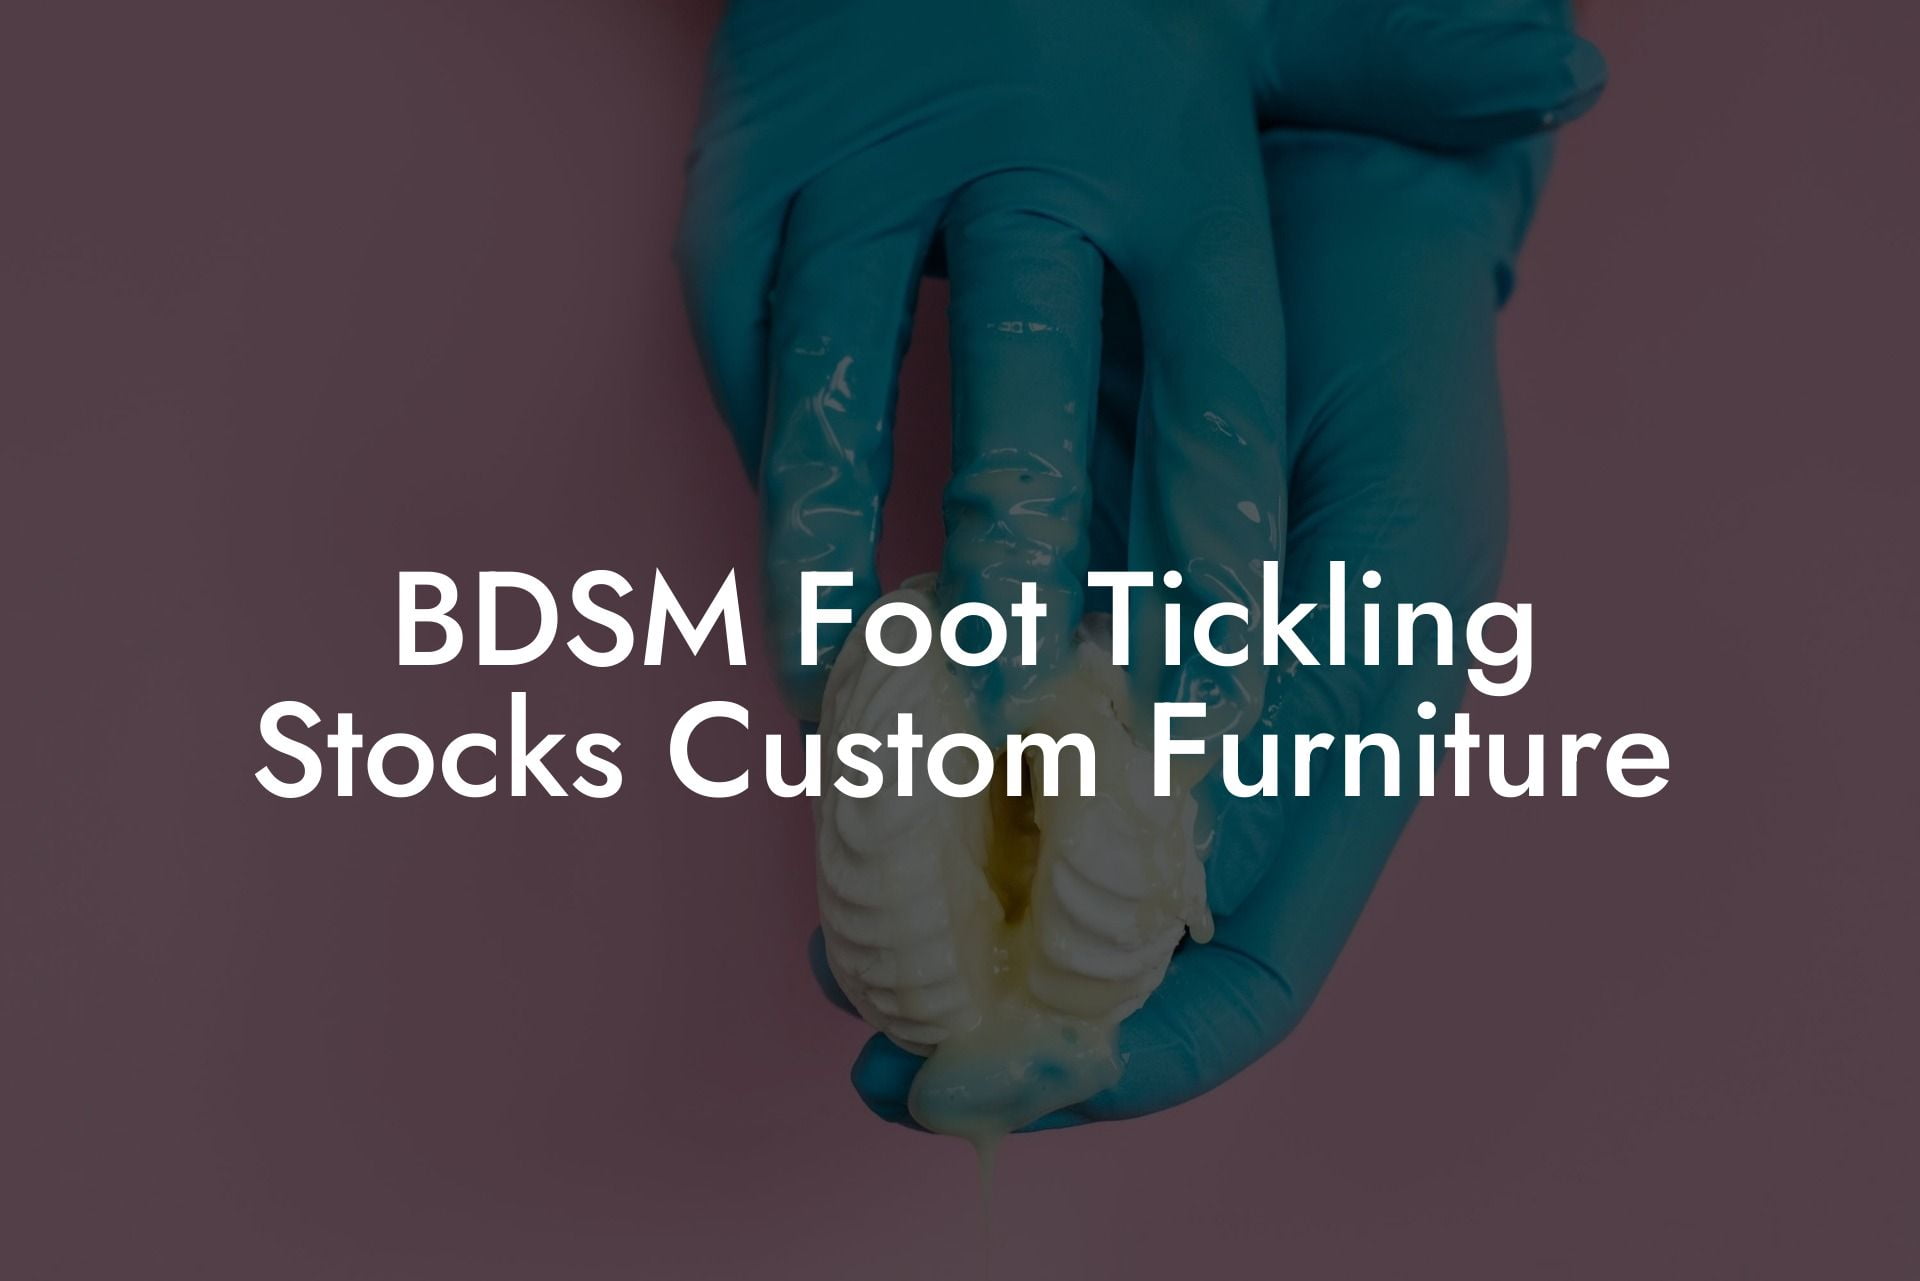 BDSM Foot Tickling Stocks Custom Furniture